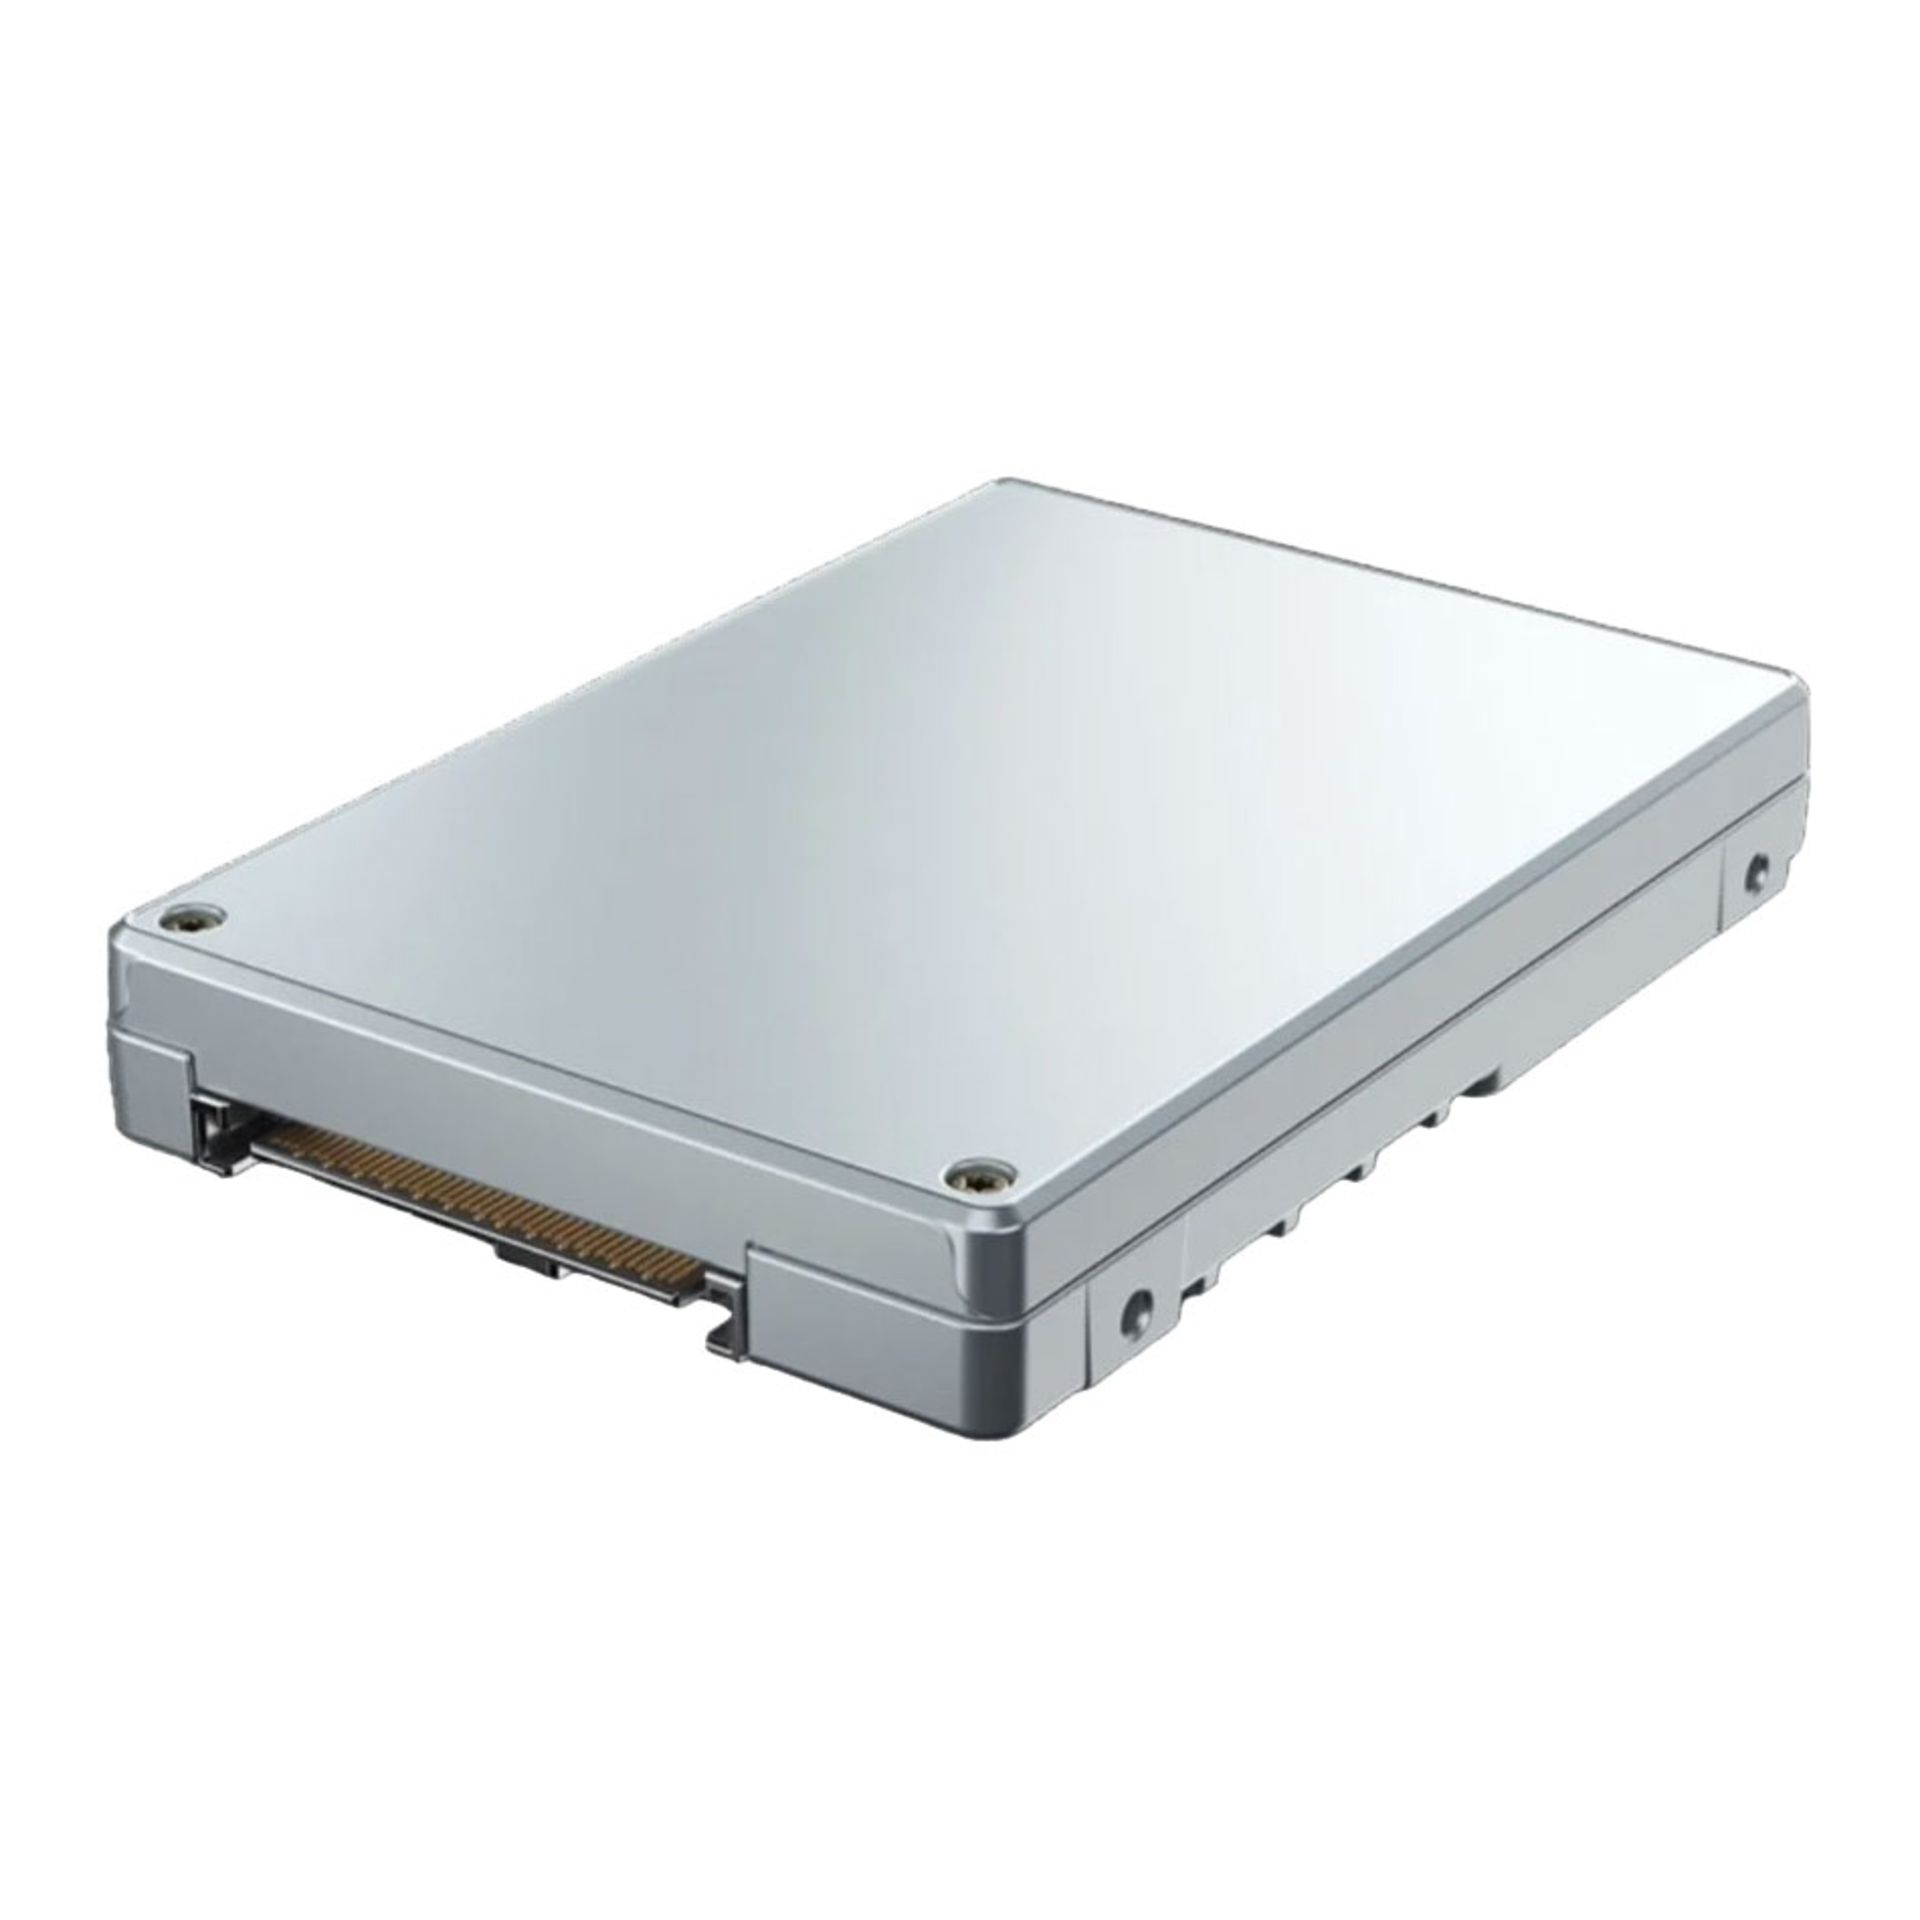 INTEL P5520 3.84TB 2.5" U.2 PCIe 4.0 x4 SSD/Solid State Drive. RRP £349. Capacity: 3.84TB. Type: